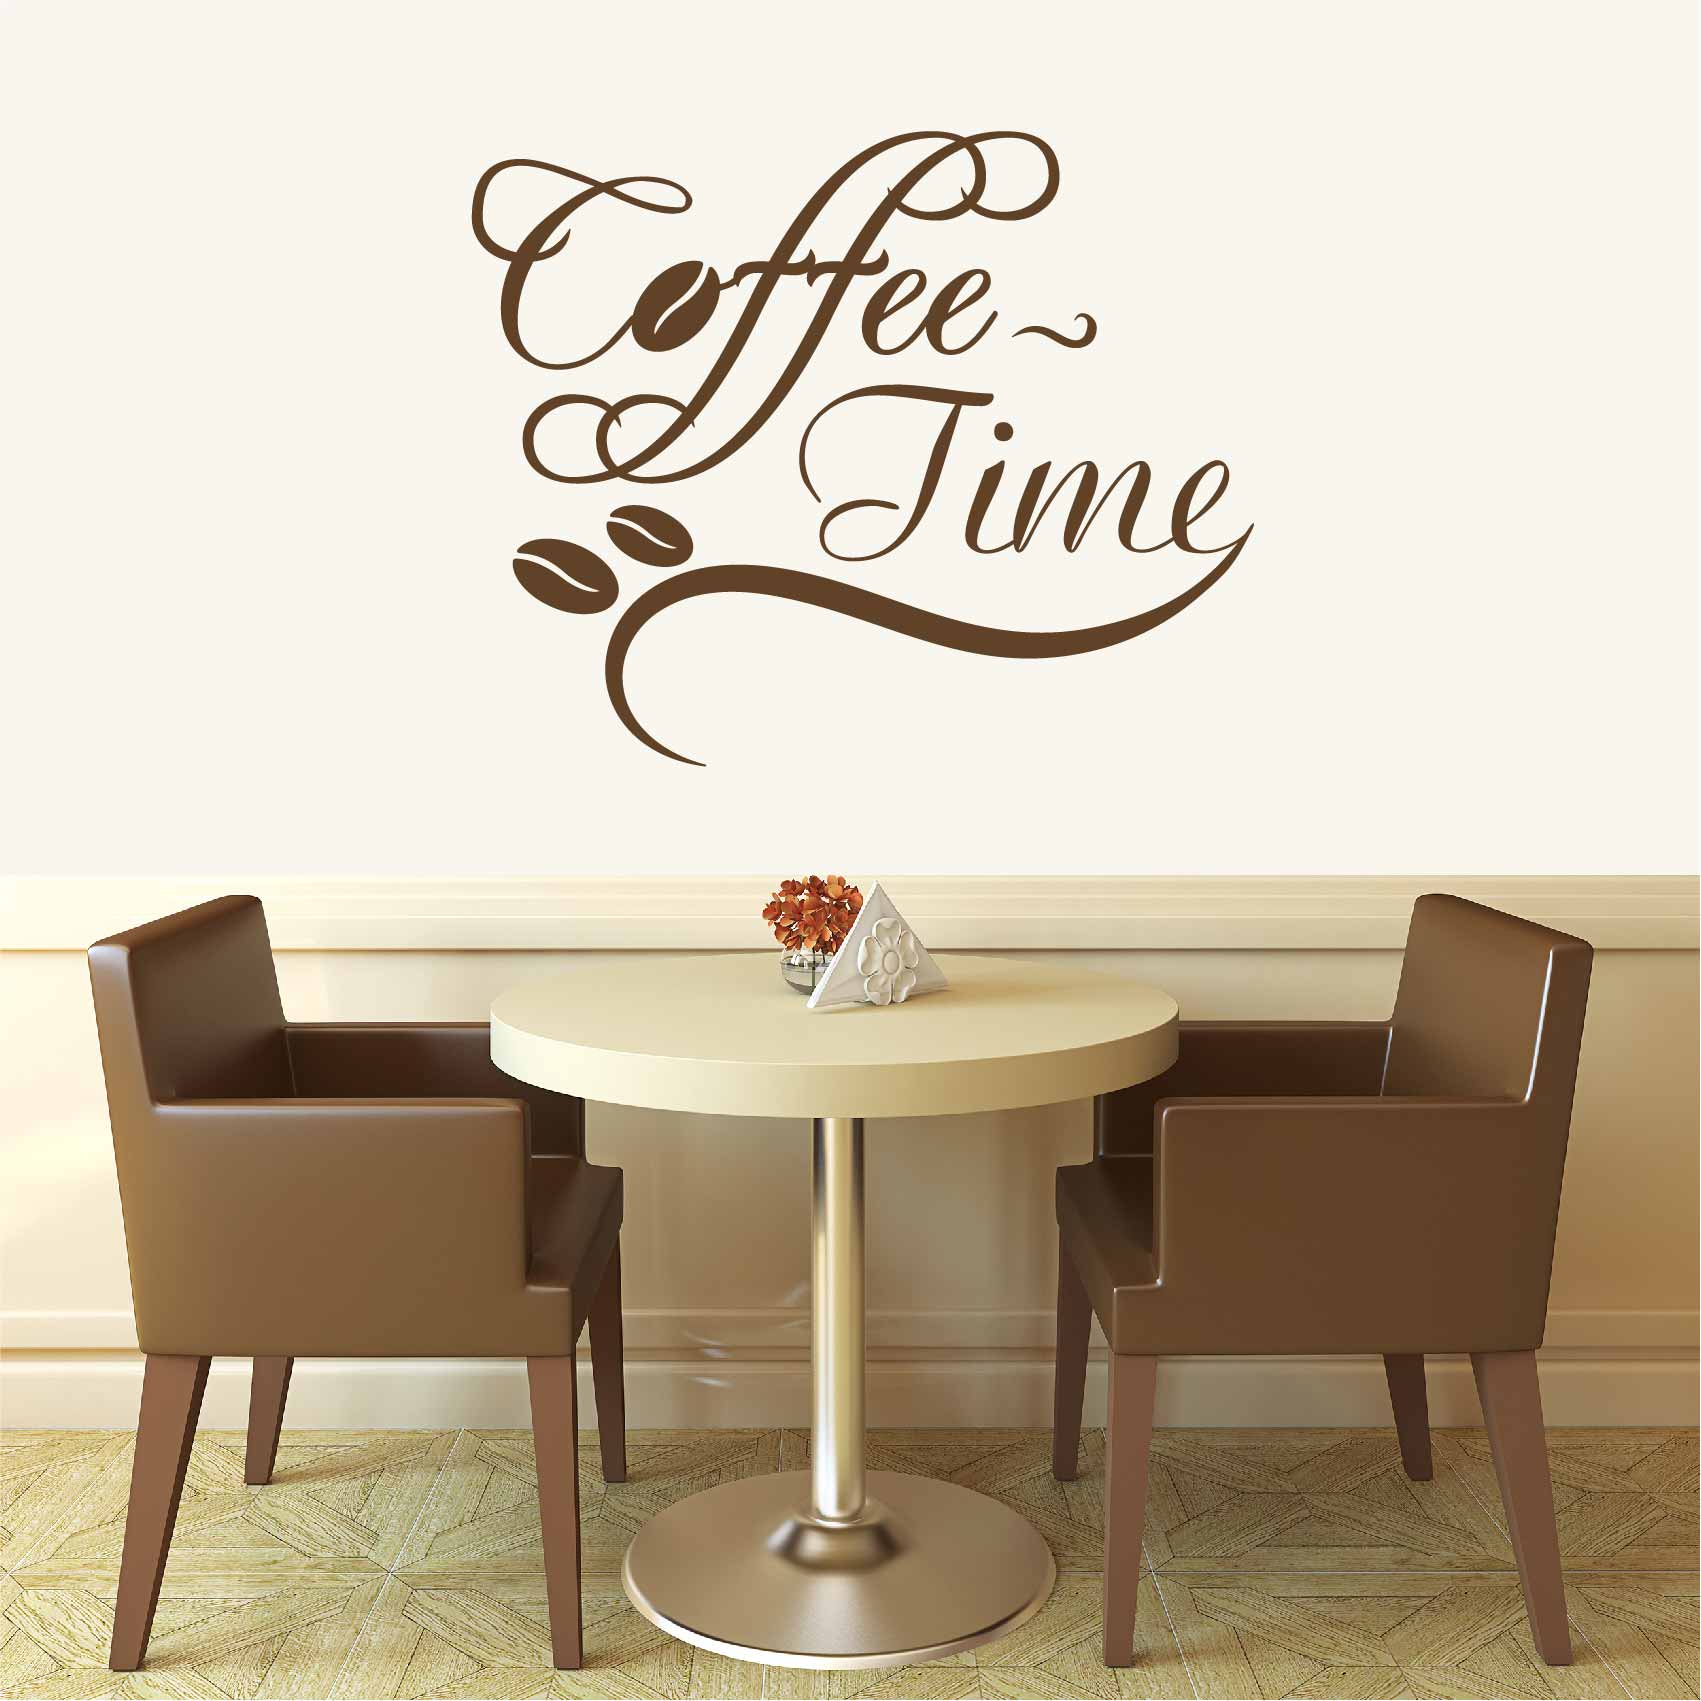 stickers-coffee-time-ref3cafe-autocollant-muraux-café-sticker-mural-cuisine-cafe-deco-salon-table